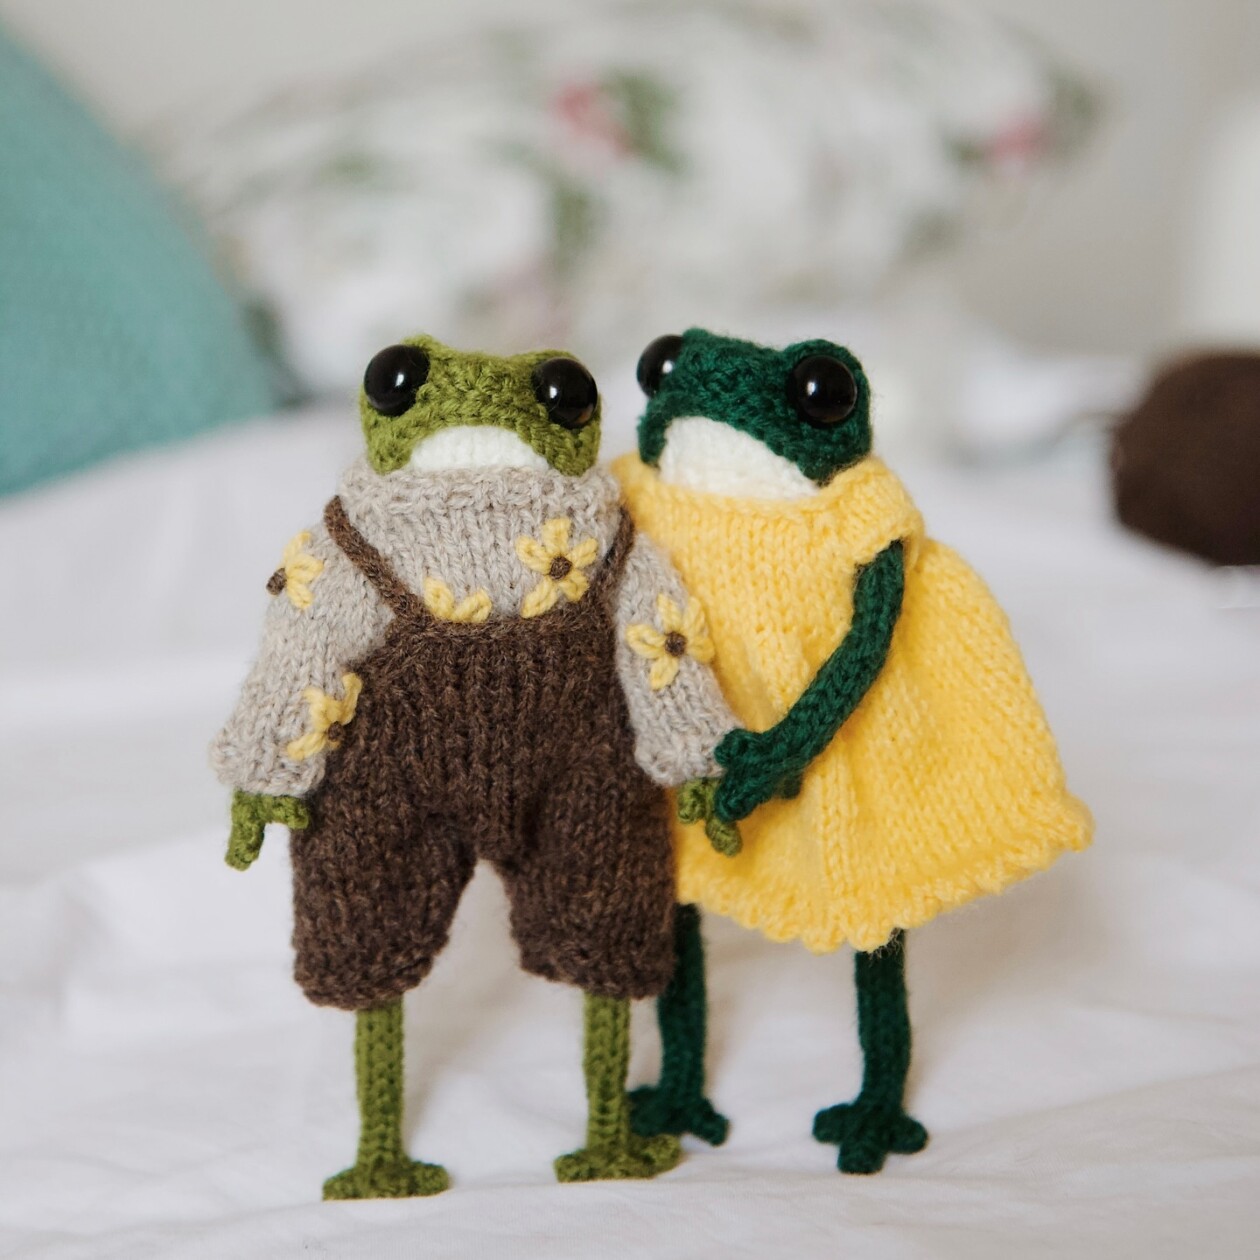 Enchanting Anthropomorphized Frog Crochet Patterns By Elliot (17)